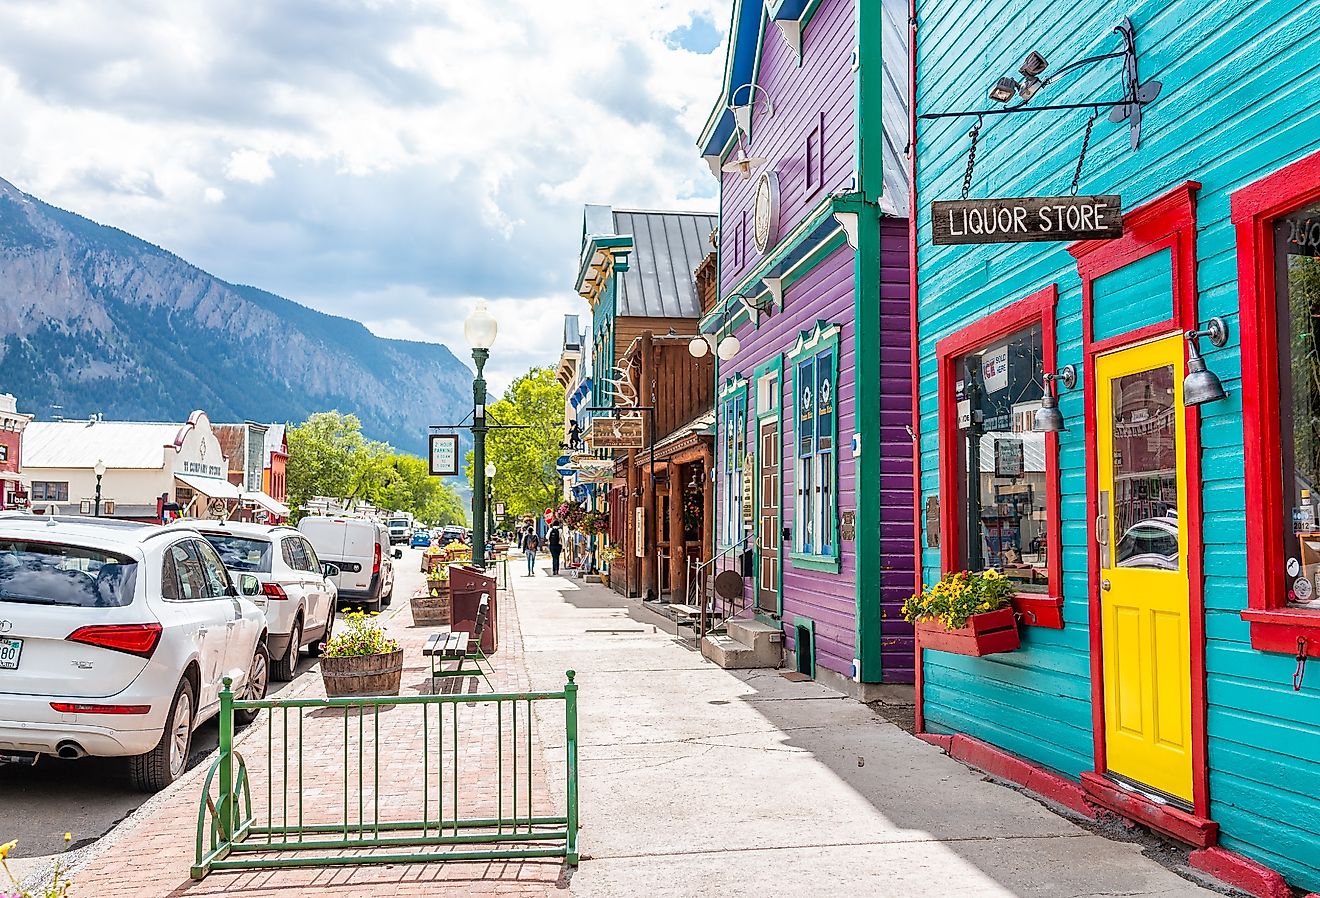 Historic downtown street of Crested Butte, Colorado. Image credit Kristi Blokhin via Shutterstock